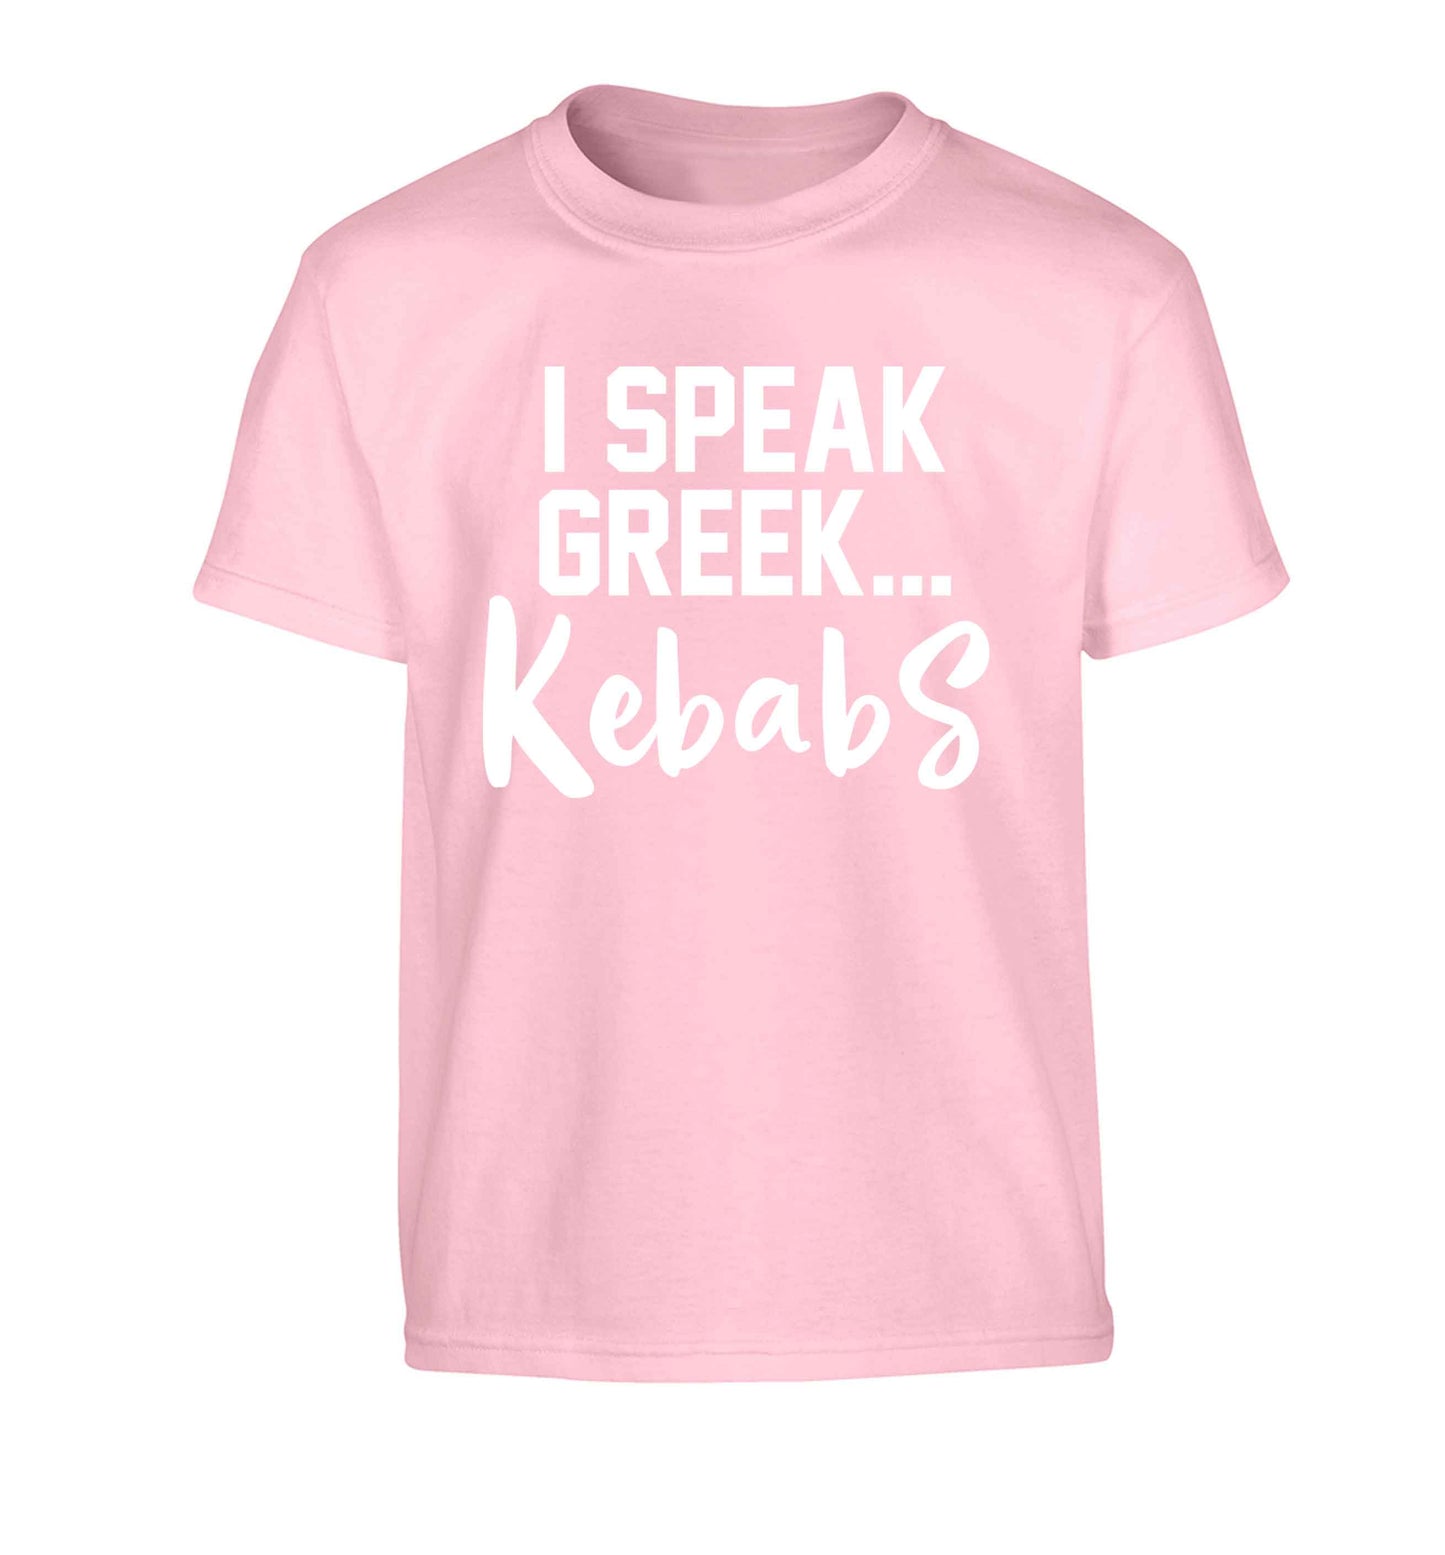 I speak Greek...kebabs Children's light pink Tshirt 12-13 Years